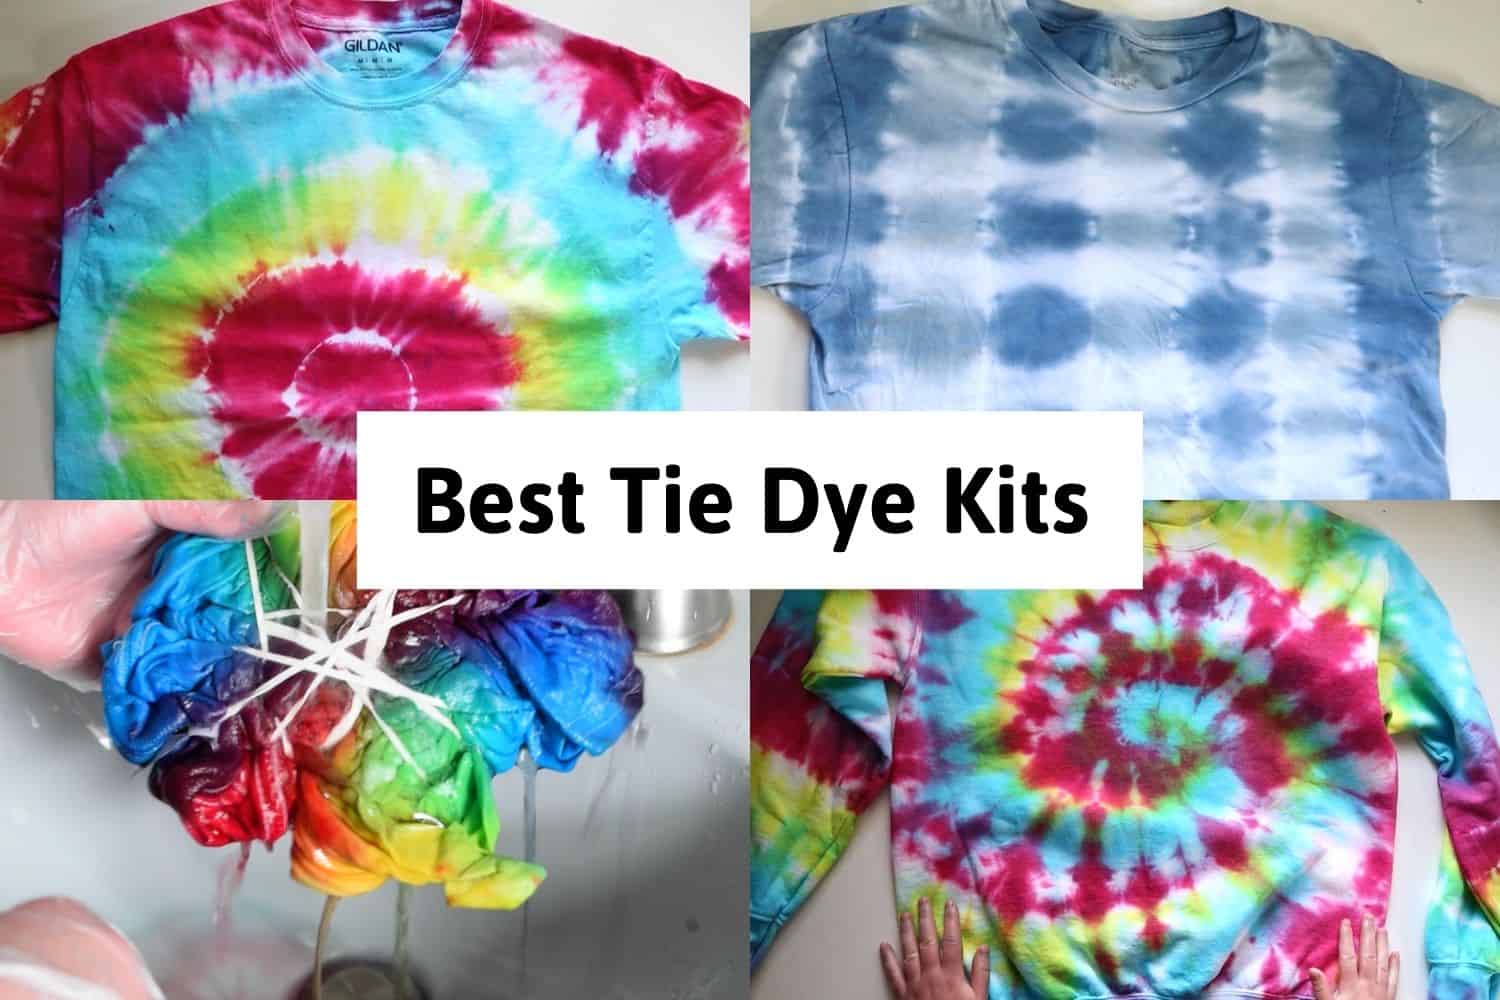 Premium Tie Dye Kit